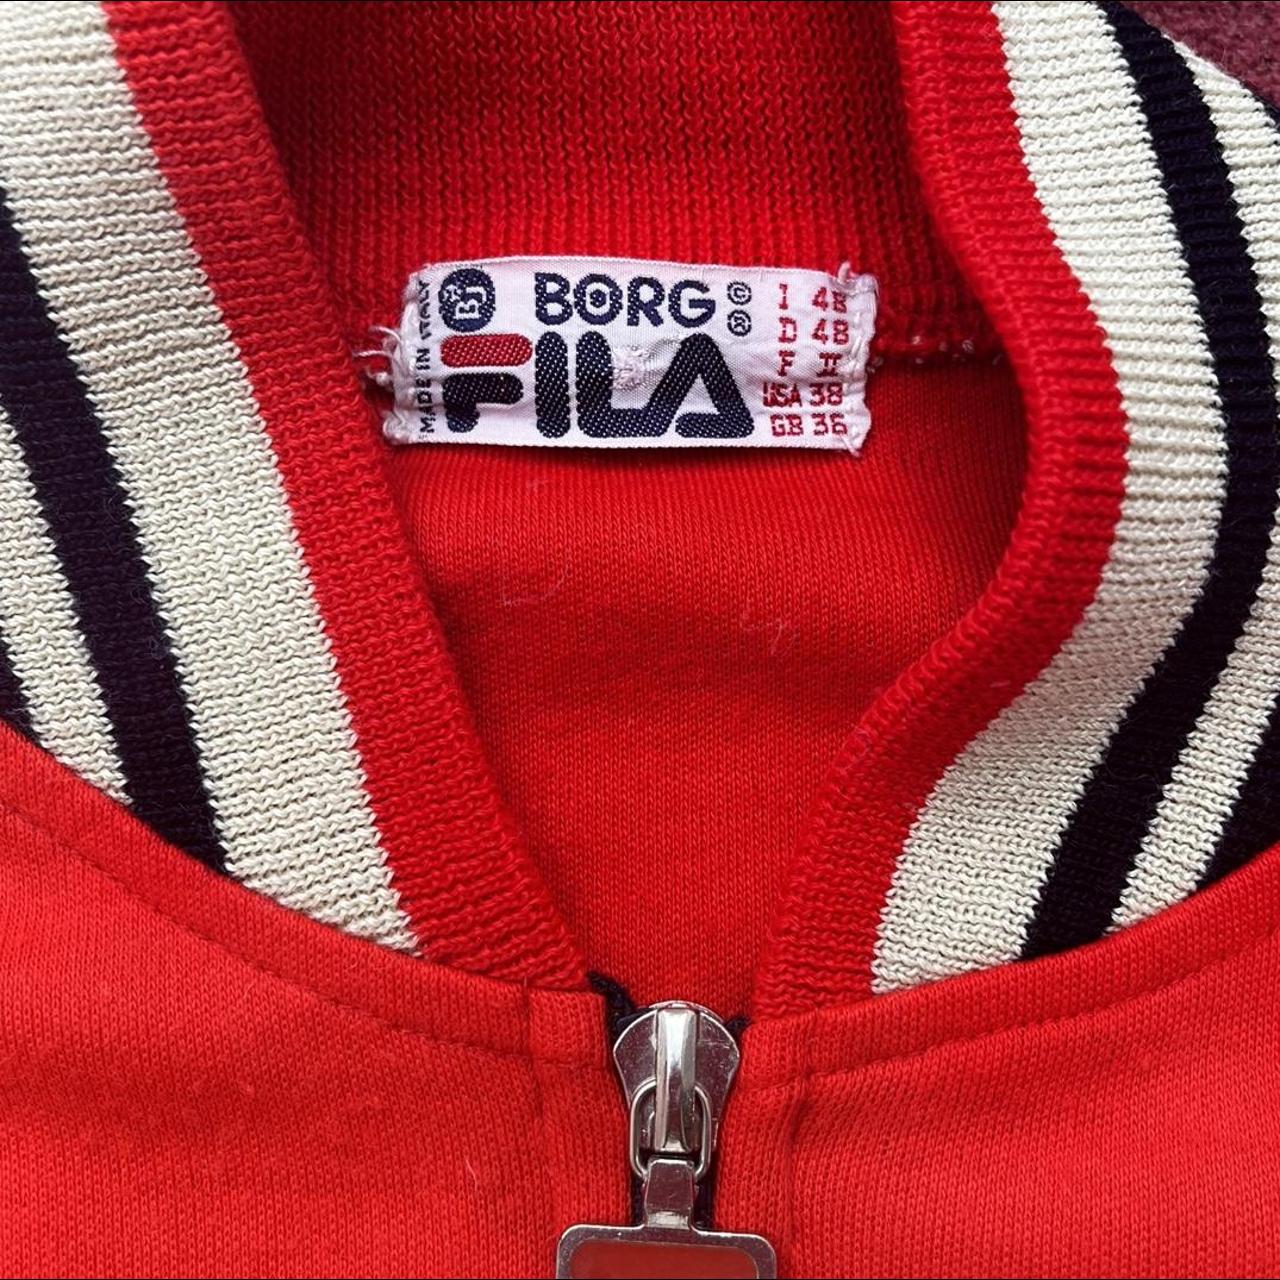 OG Fila BJ as worn by Bjorn Borg. If you’re looking... - Depop